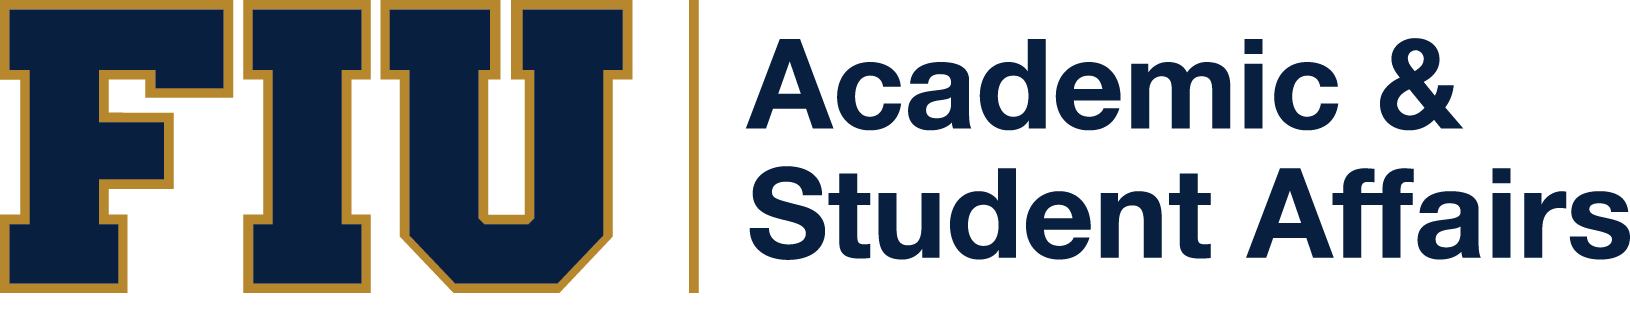 FIU Academic & Student Affairs logo